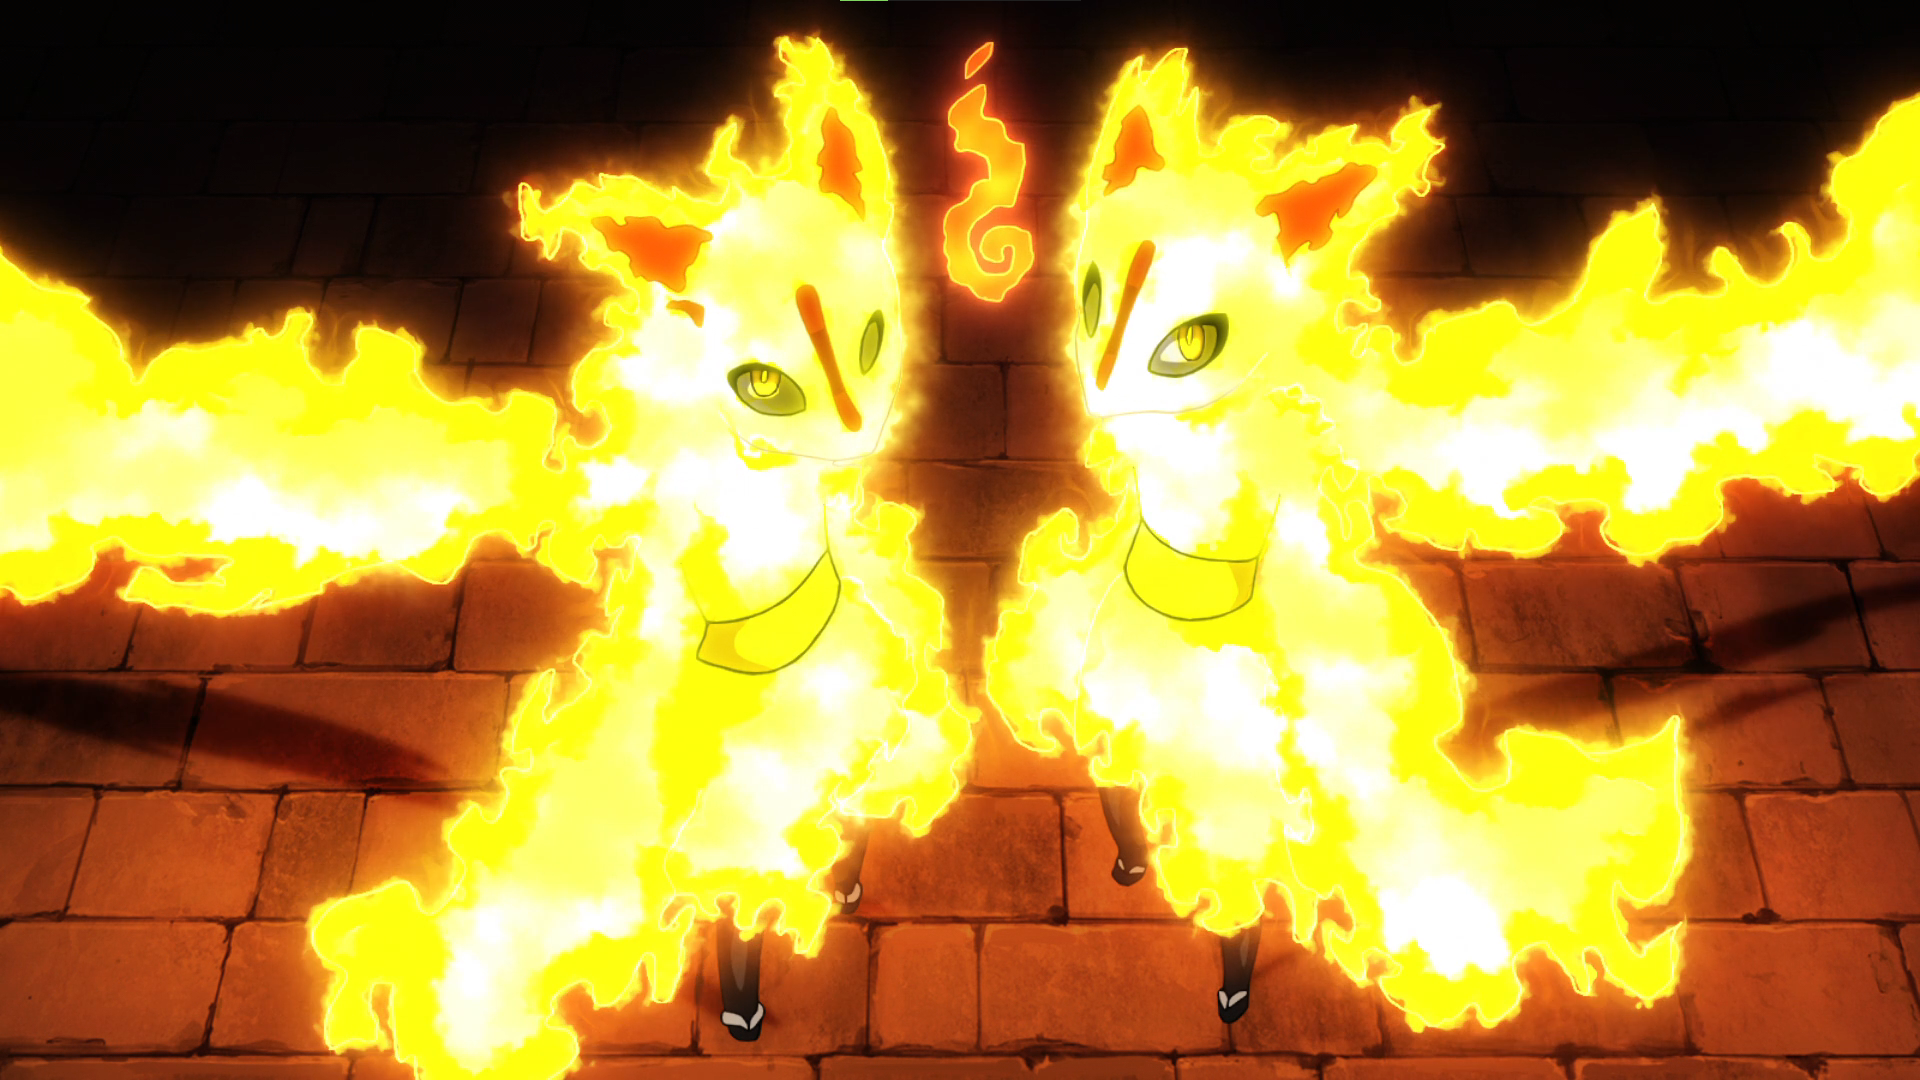 Anime 1920x1080 Enen no Shouboutai anime anime boys glowing eyes Anime screenshot fire looking at viewer anime girls